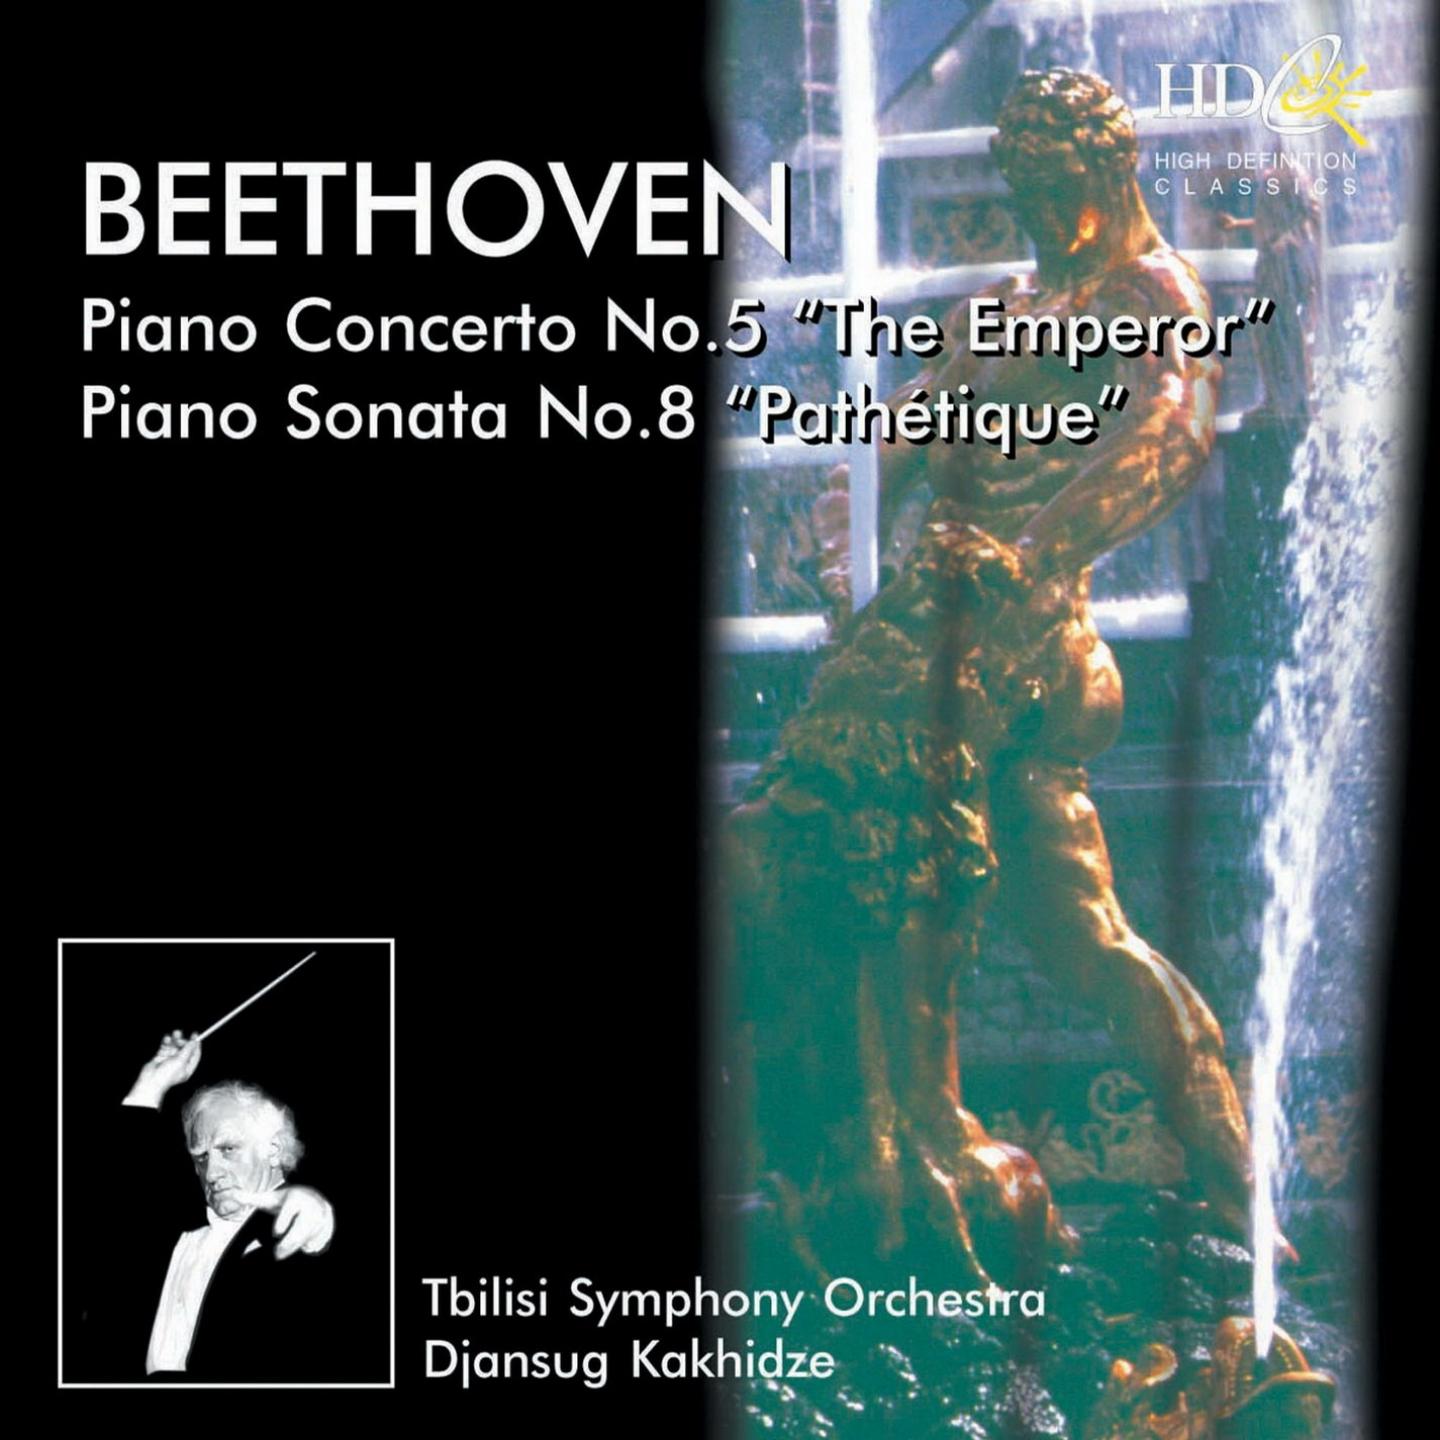 Piano Concerto No.5 in E-Flat Major, The Emperor, Op. 73 : I. Allegro